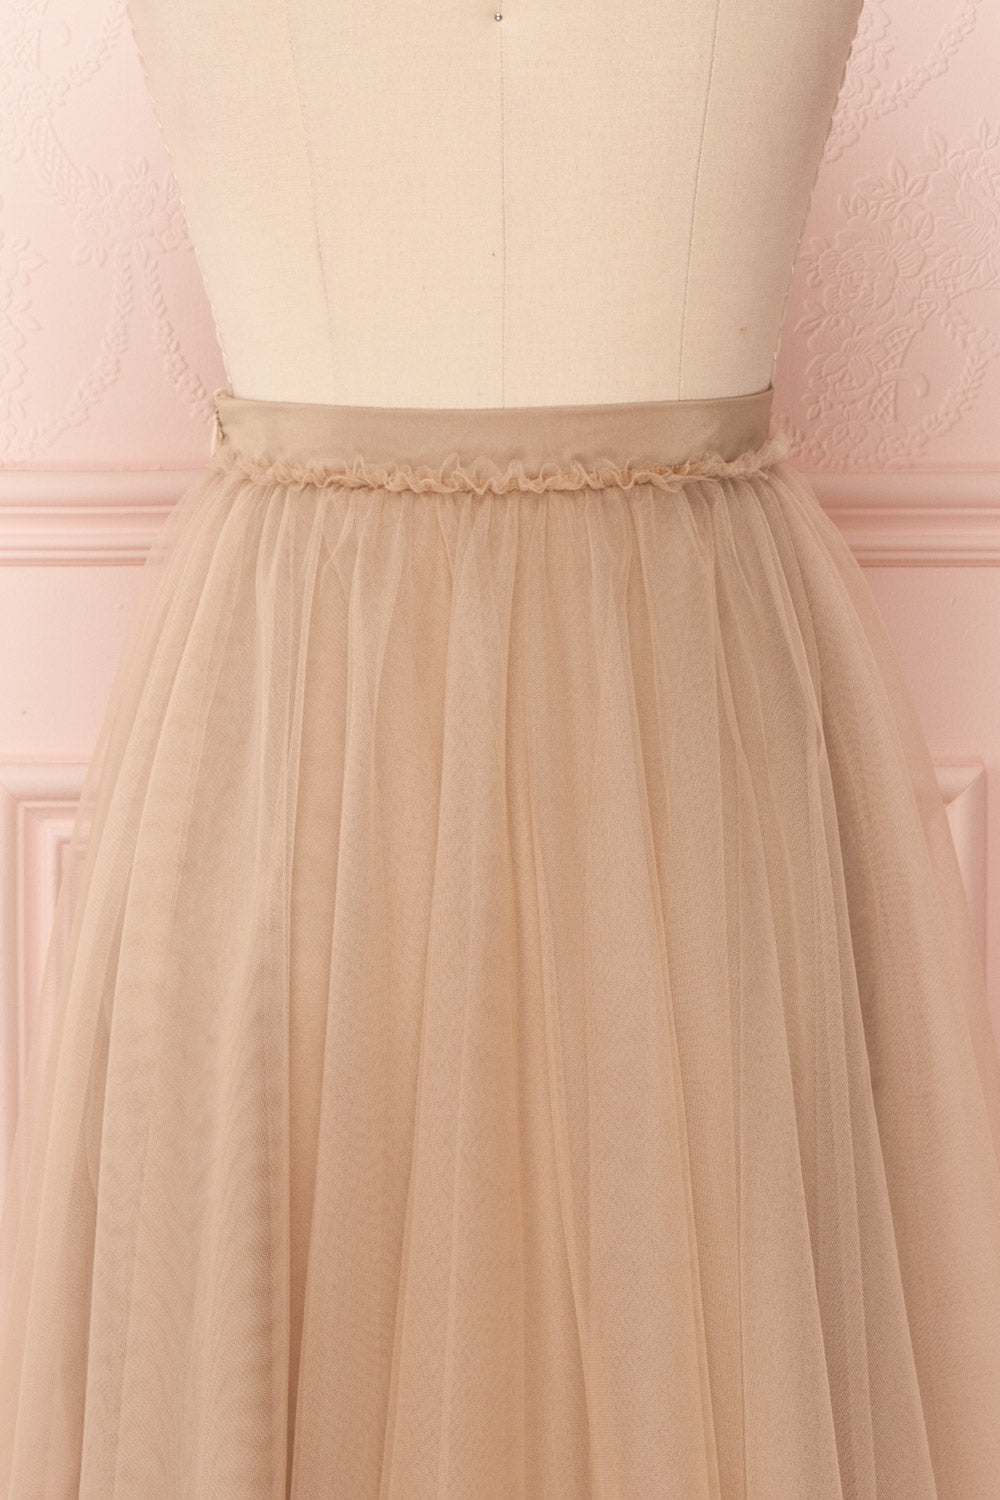 Othilie Beige Tulle A-Line Skirt | Boutique 1861 7